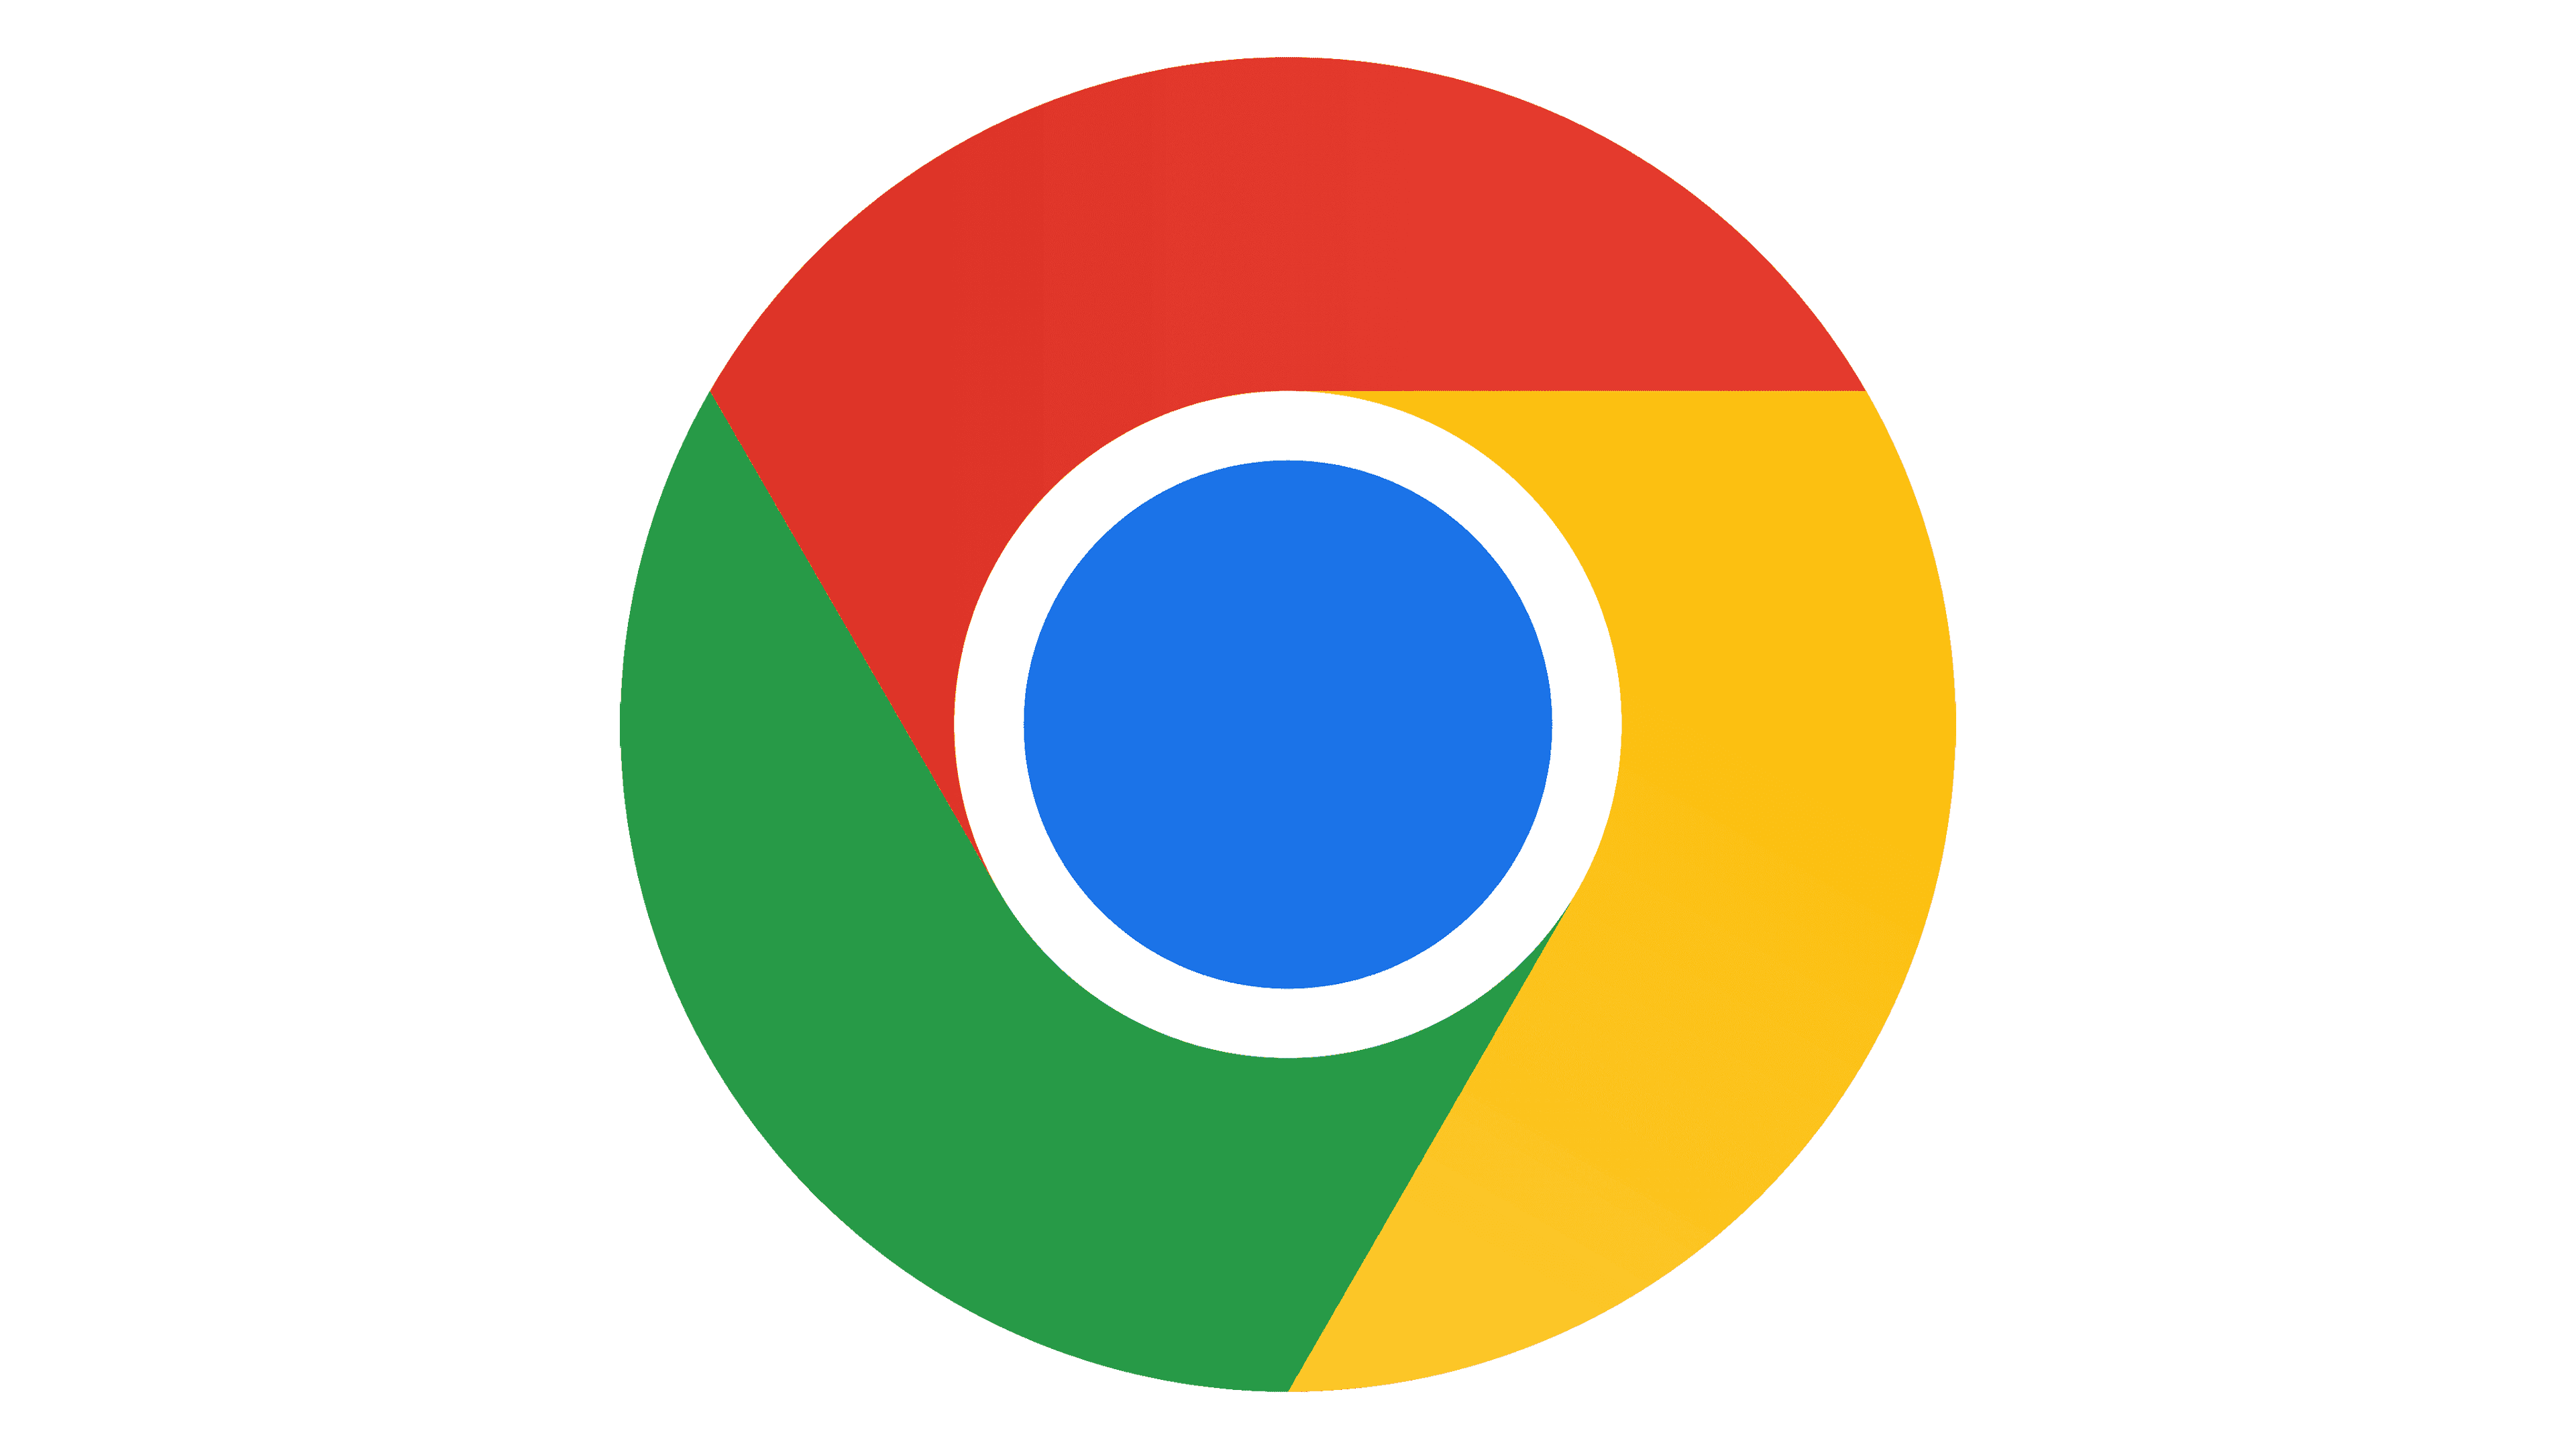 Chrome Logo, Chrome Symbol, Meaning, History and Evolution